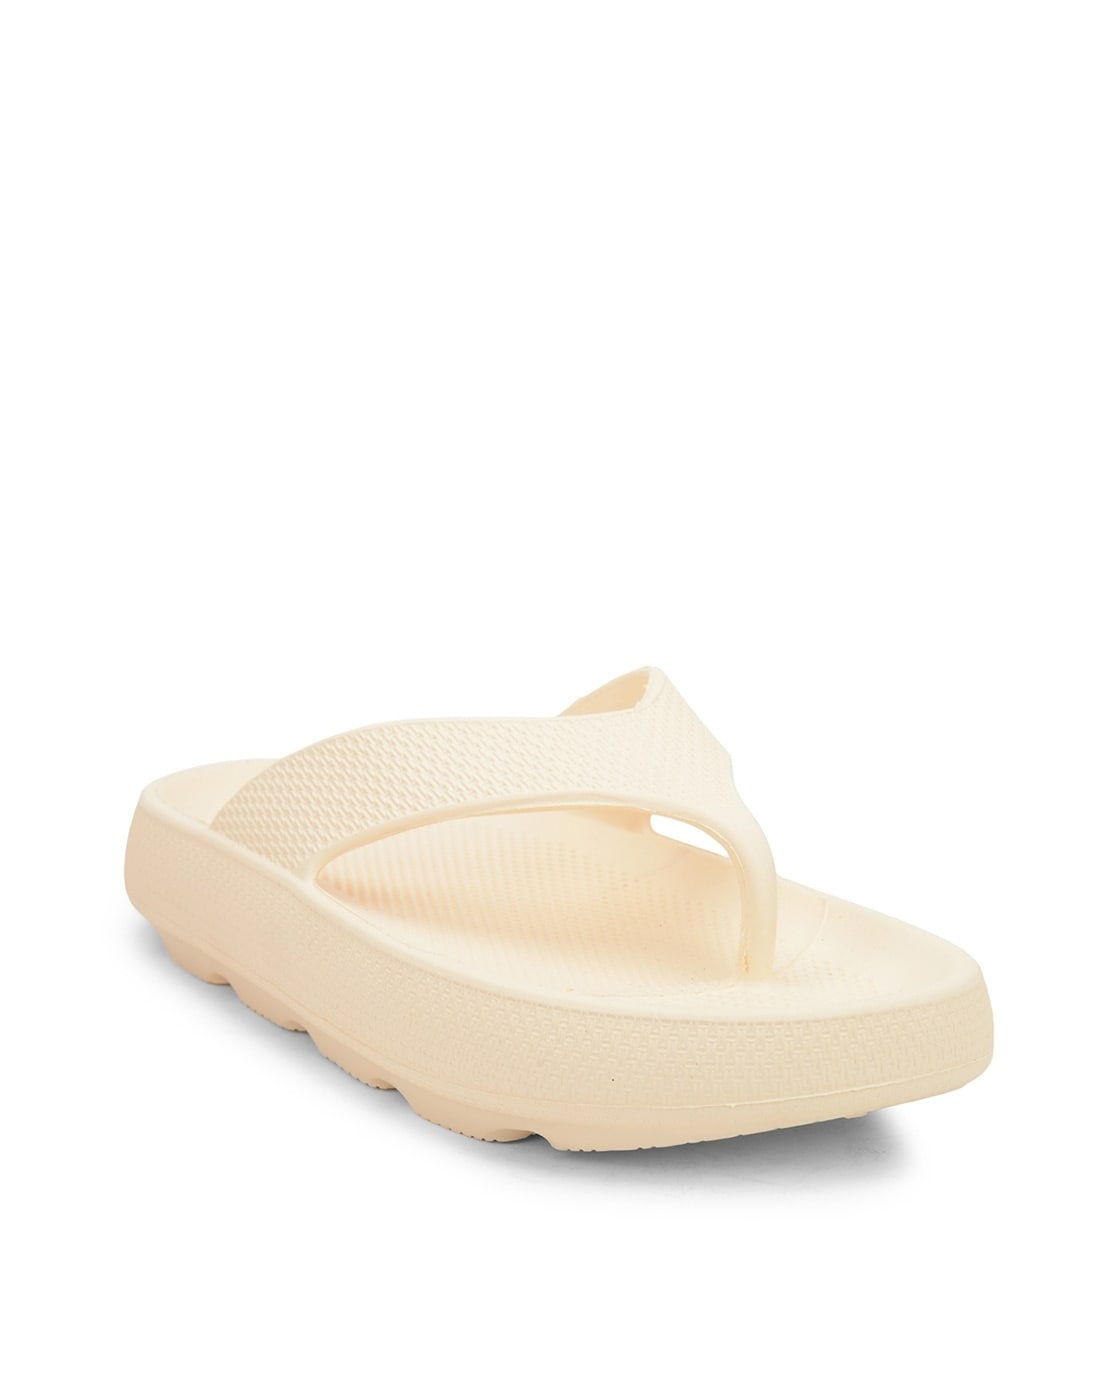 Buy Peach Flat Sandals for Women by SHEZONE Online | Ajio.com